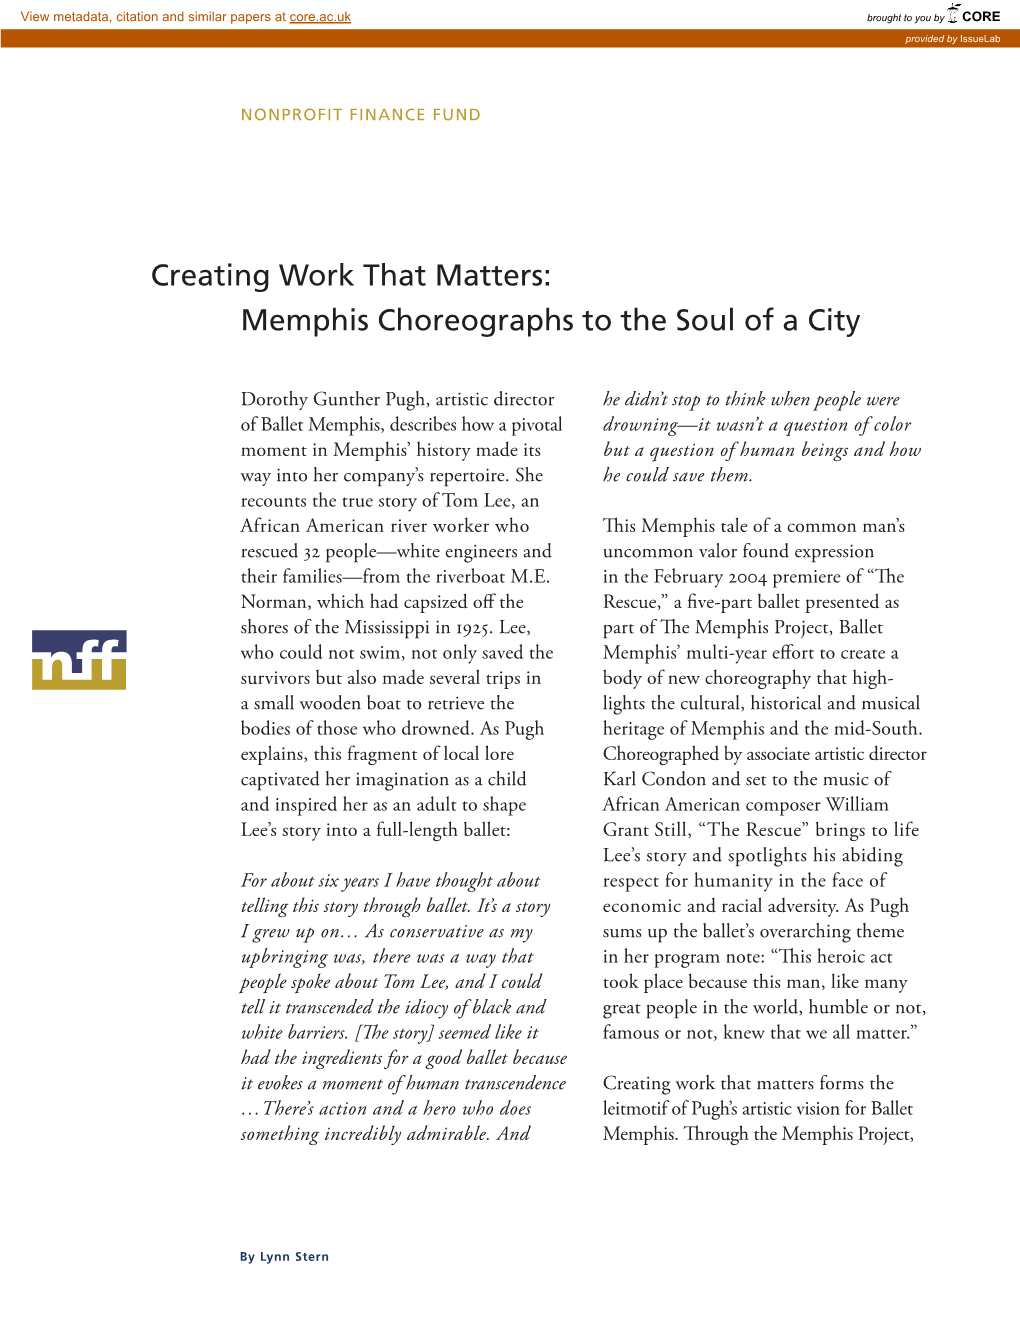 Memphis Choreographs to the Soul of a City